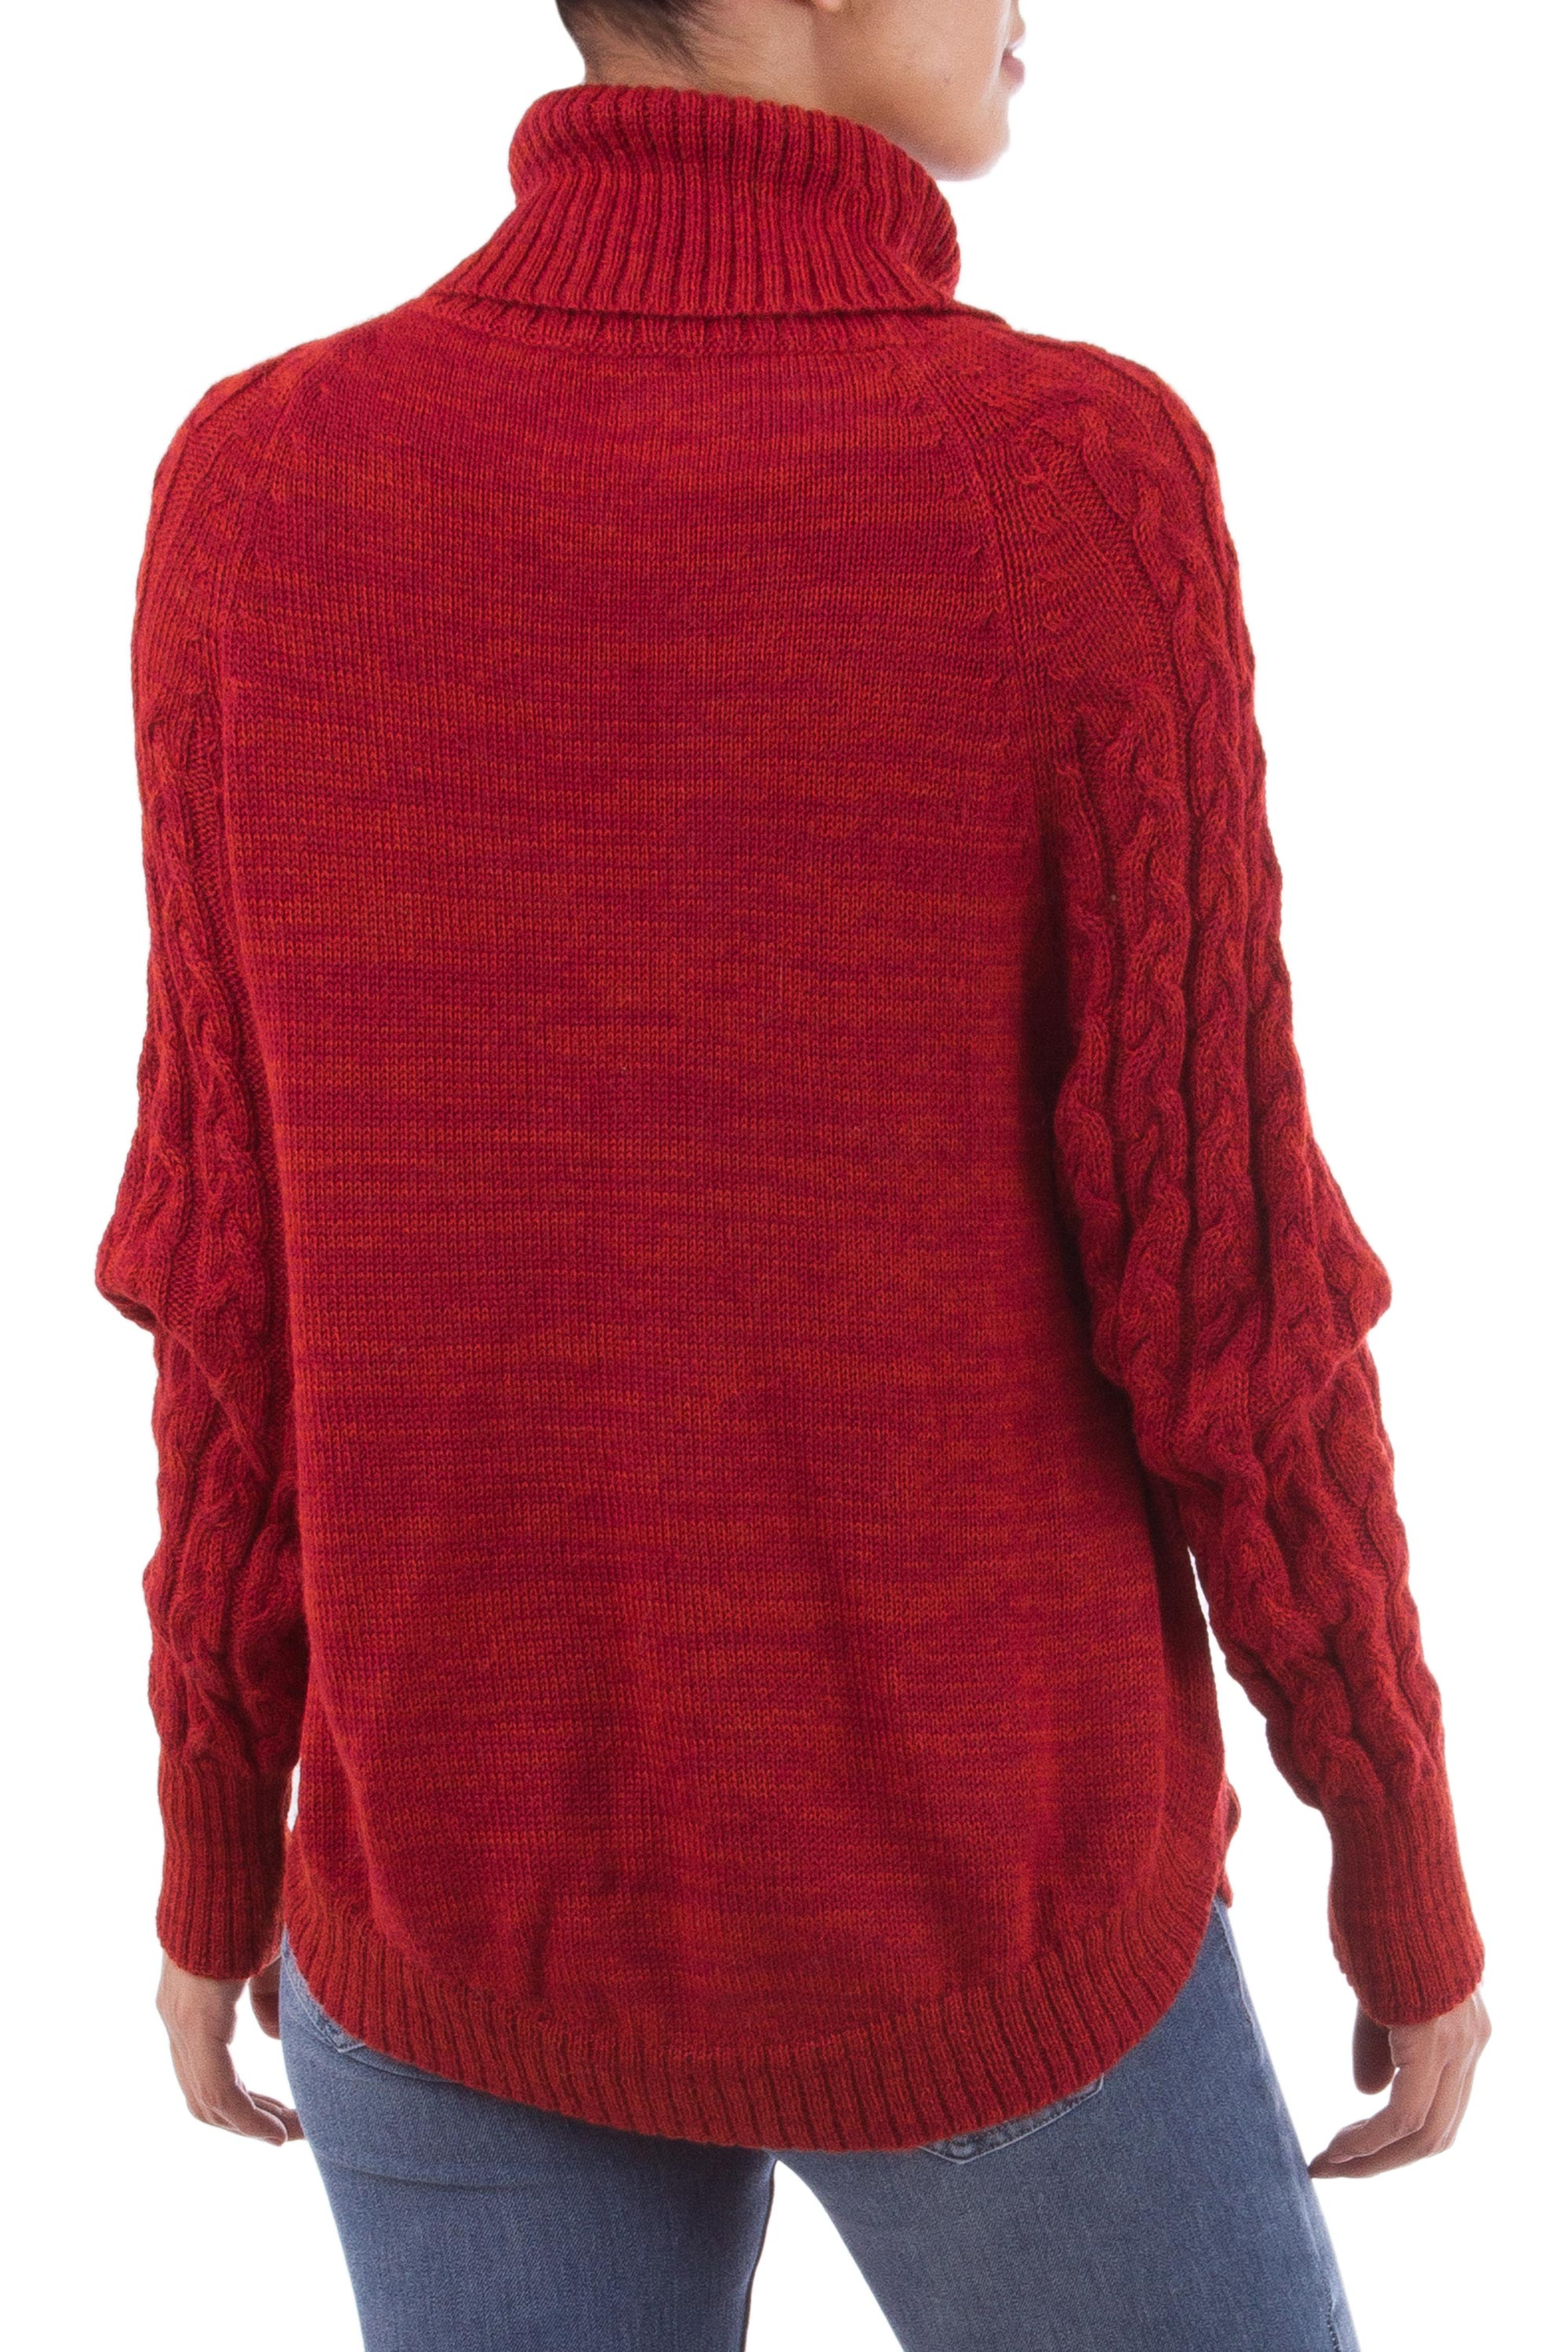 UNICEF Market | Knit Red Baby Alpaca Turtleneck Sweater from Peru ...